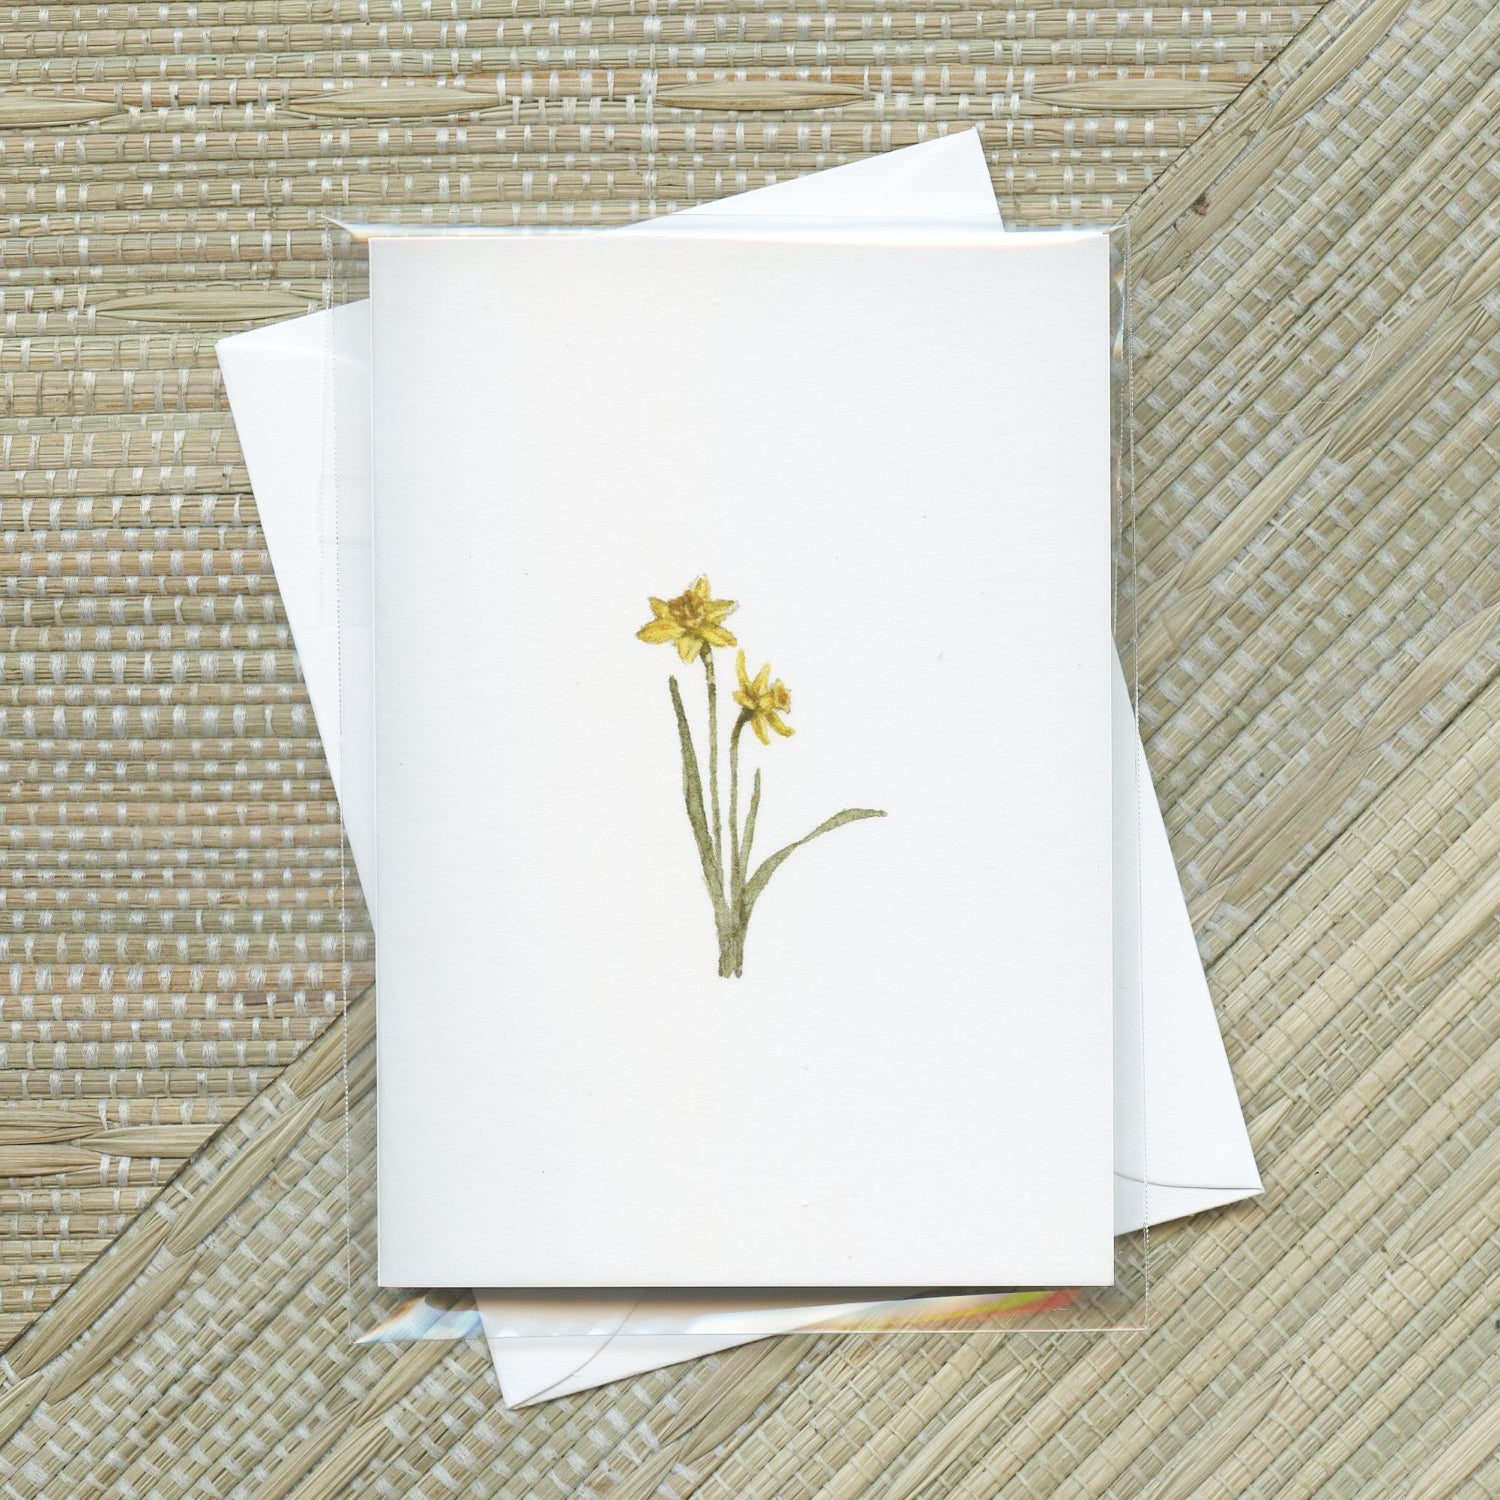 "Daffodils" Greeting Card